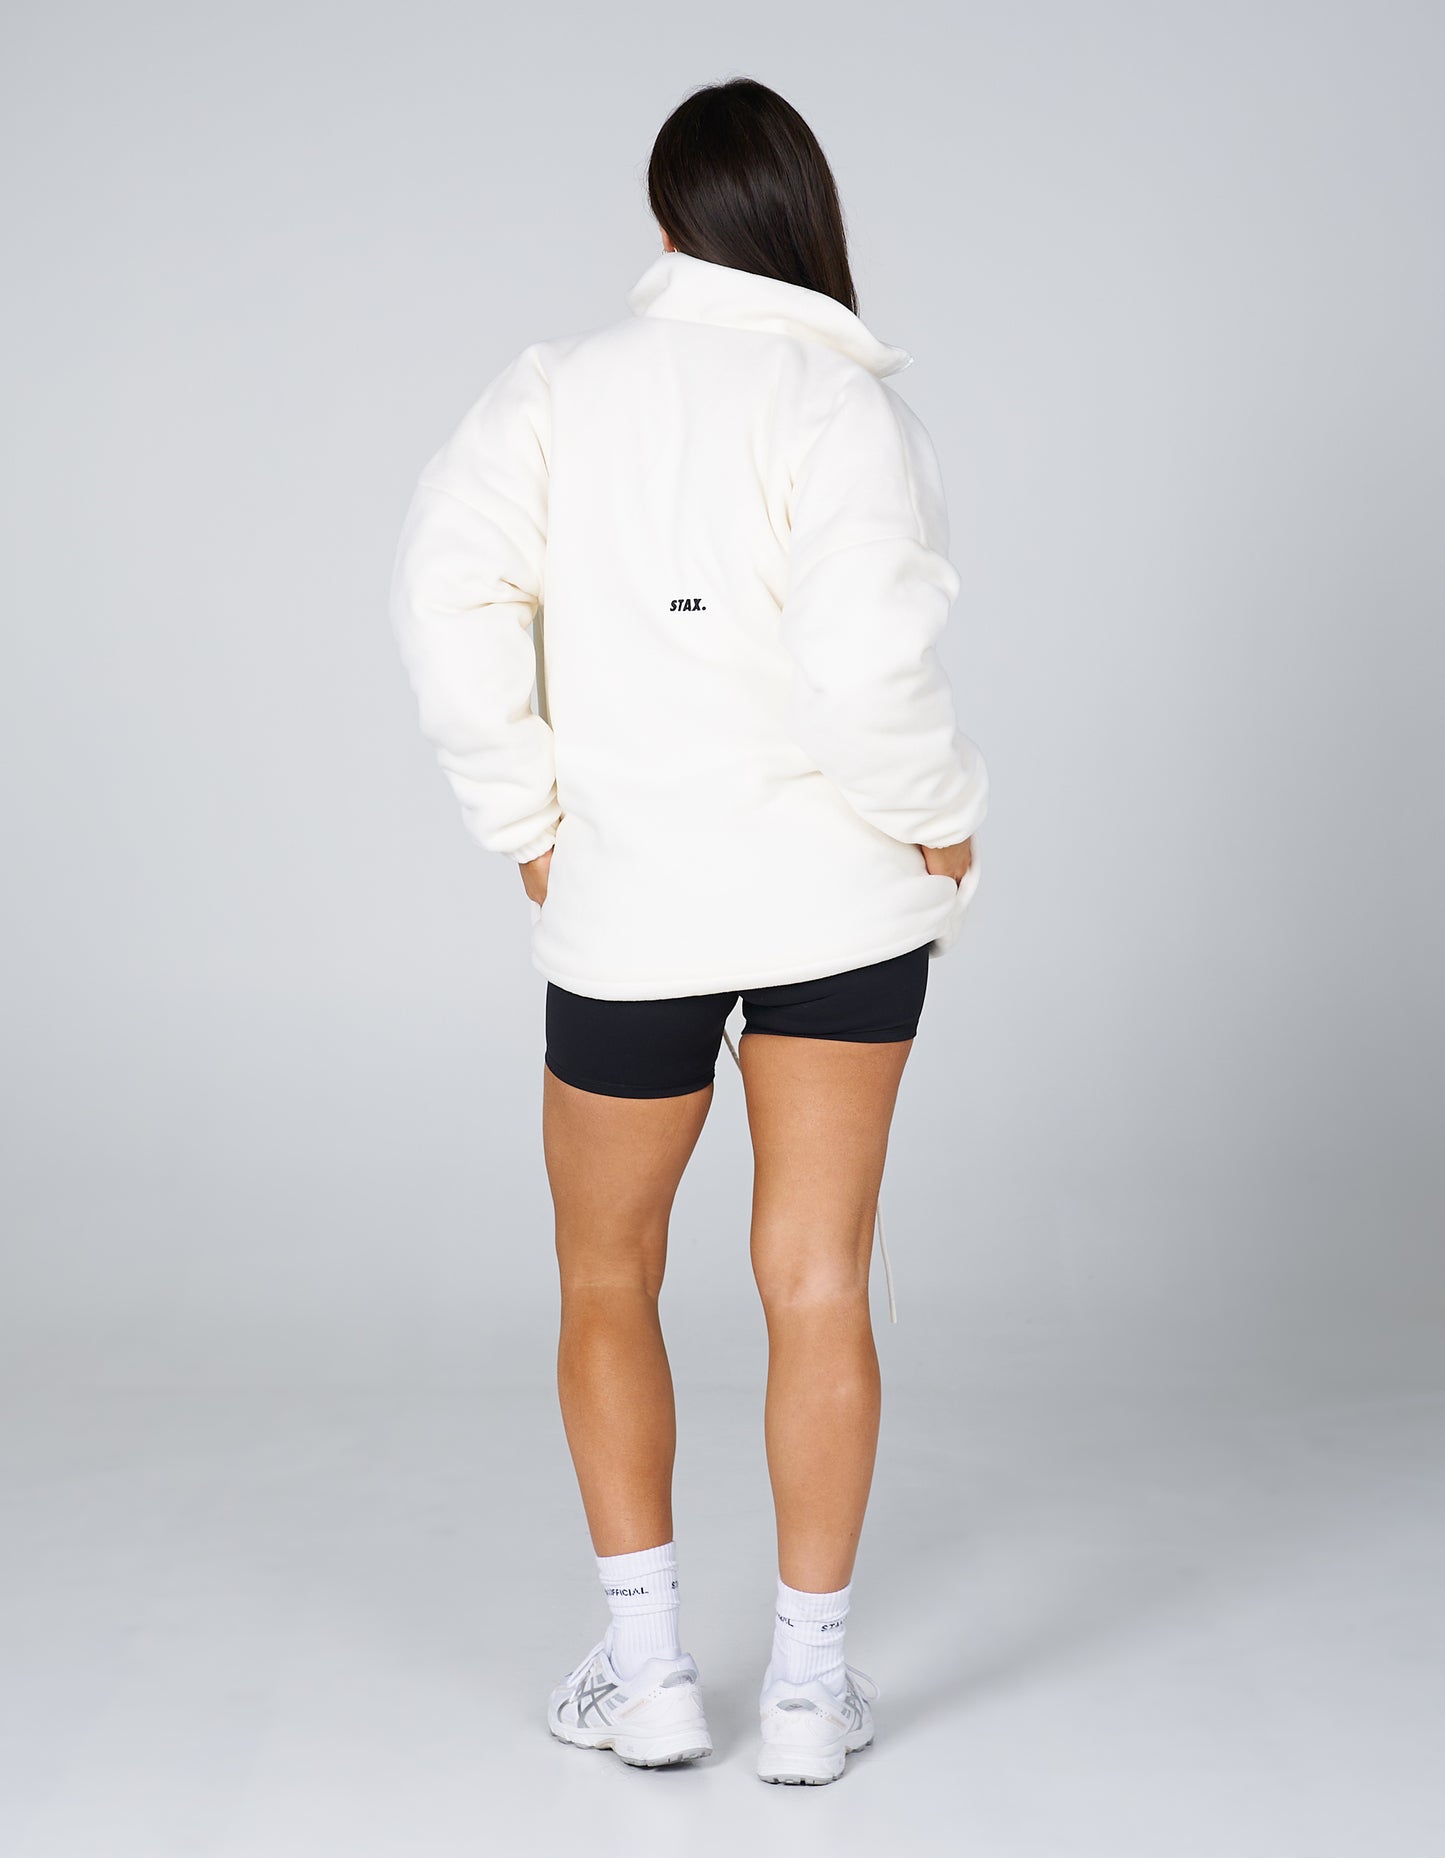 Originals Polar Fleece Jacket- White